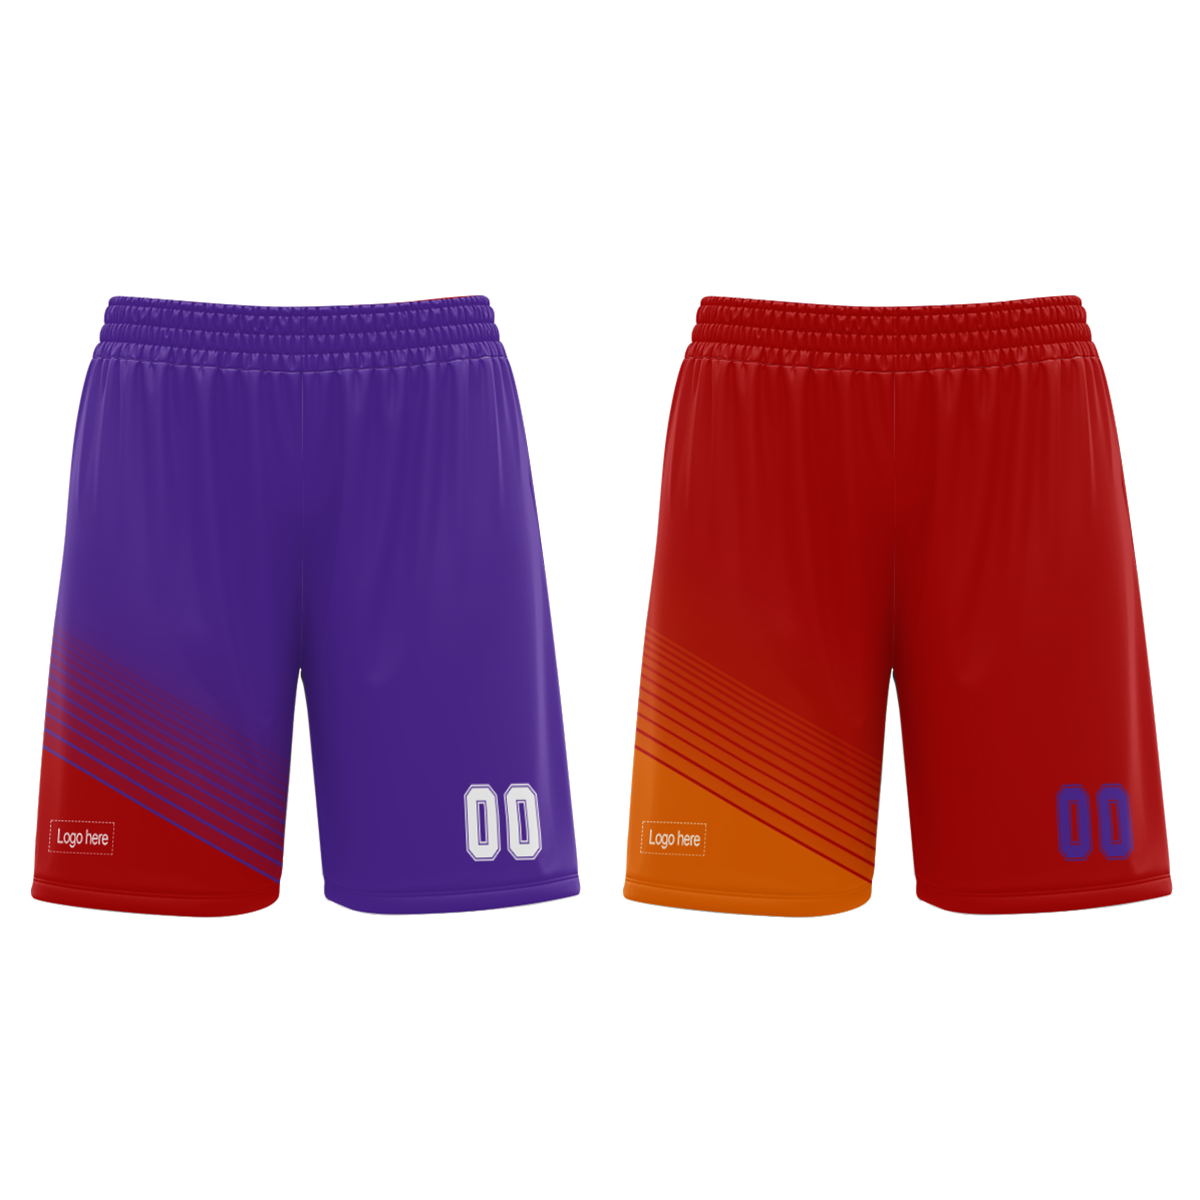 custom-sports-uniform-jerseys-printed-sublimation-reversible-athletic-team-basketball-vest-jersey-wear-for-men-women-at-cj-pod-7